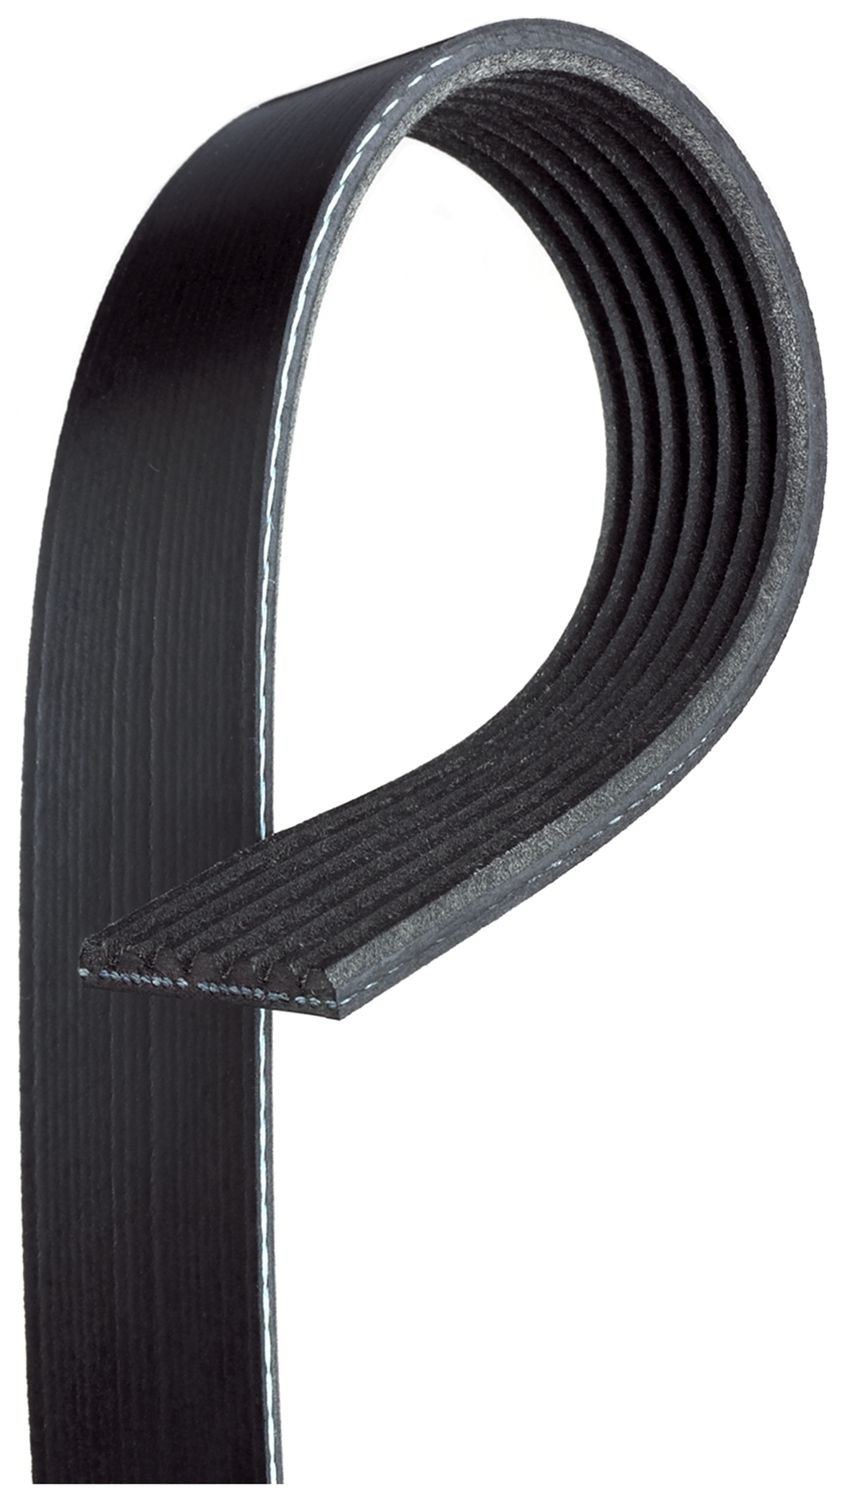 7PK1600 GATES Alternator belt DACIA 1600mm, 7, G-Force™ C12™ CVT Belt